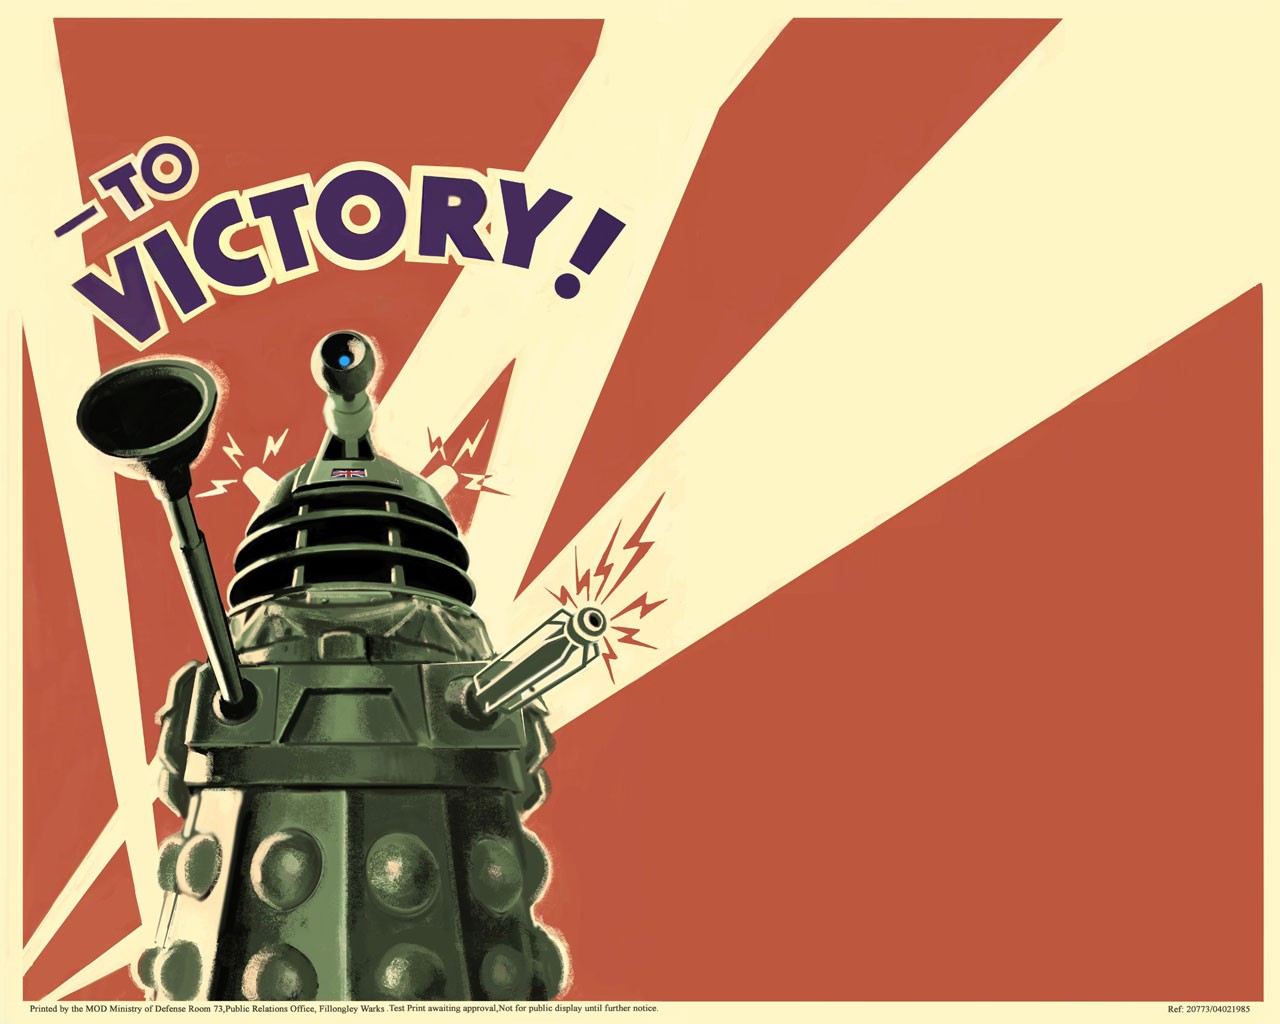 General 1280x1024 Doctor Who Daleks villains TV series artwork science fiction